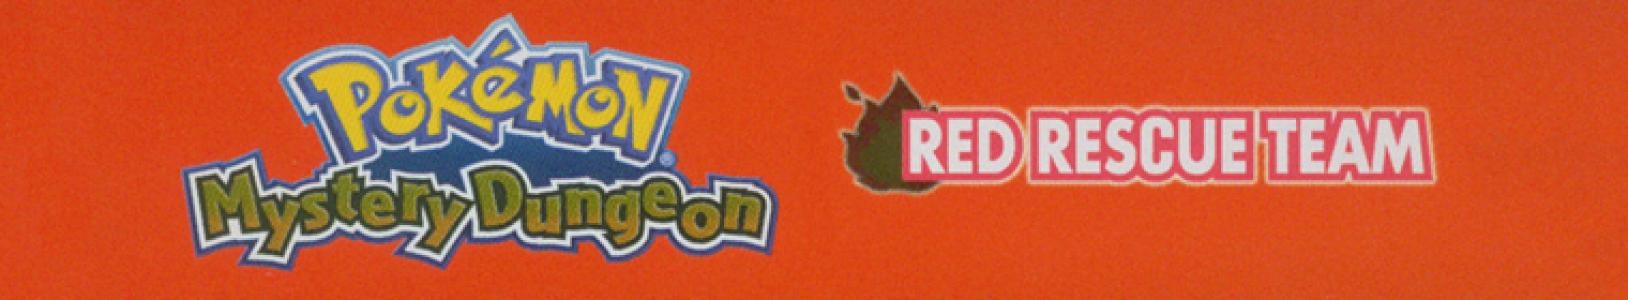 Pokémon Mystery Dungeon: Red Rescue Team banner